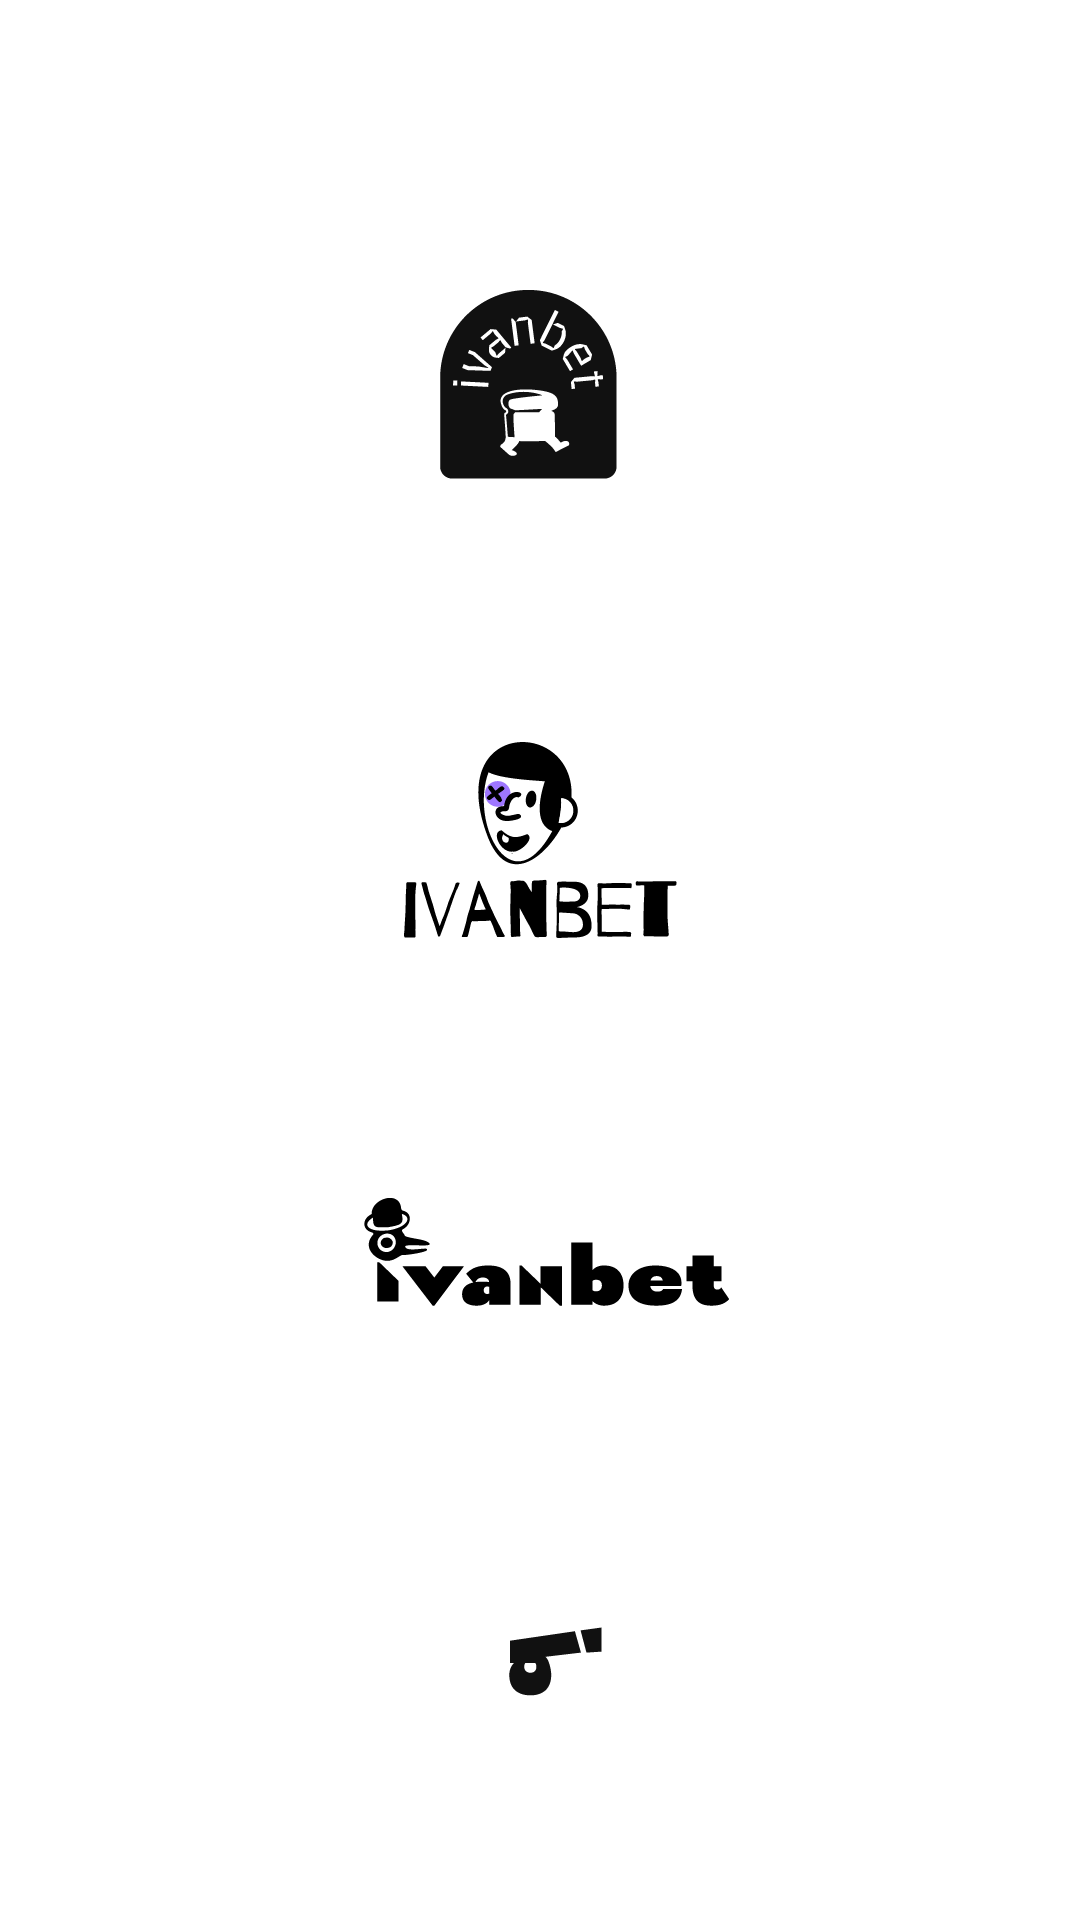 ivanbet-01.png title=